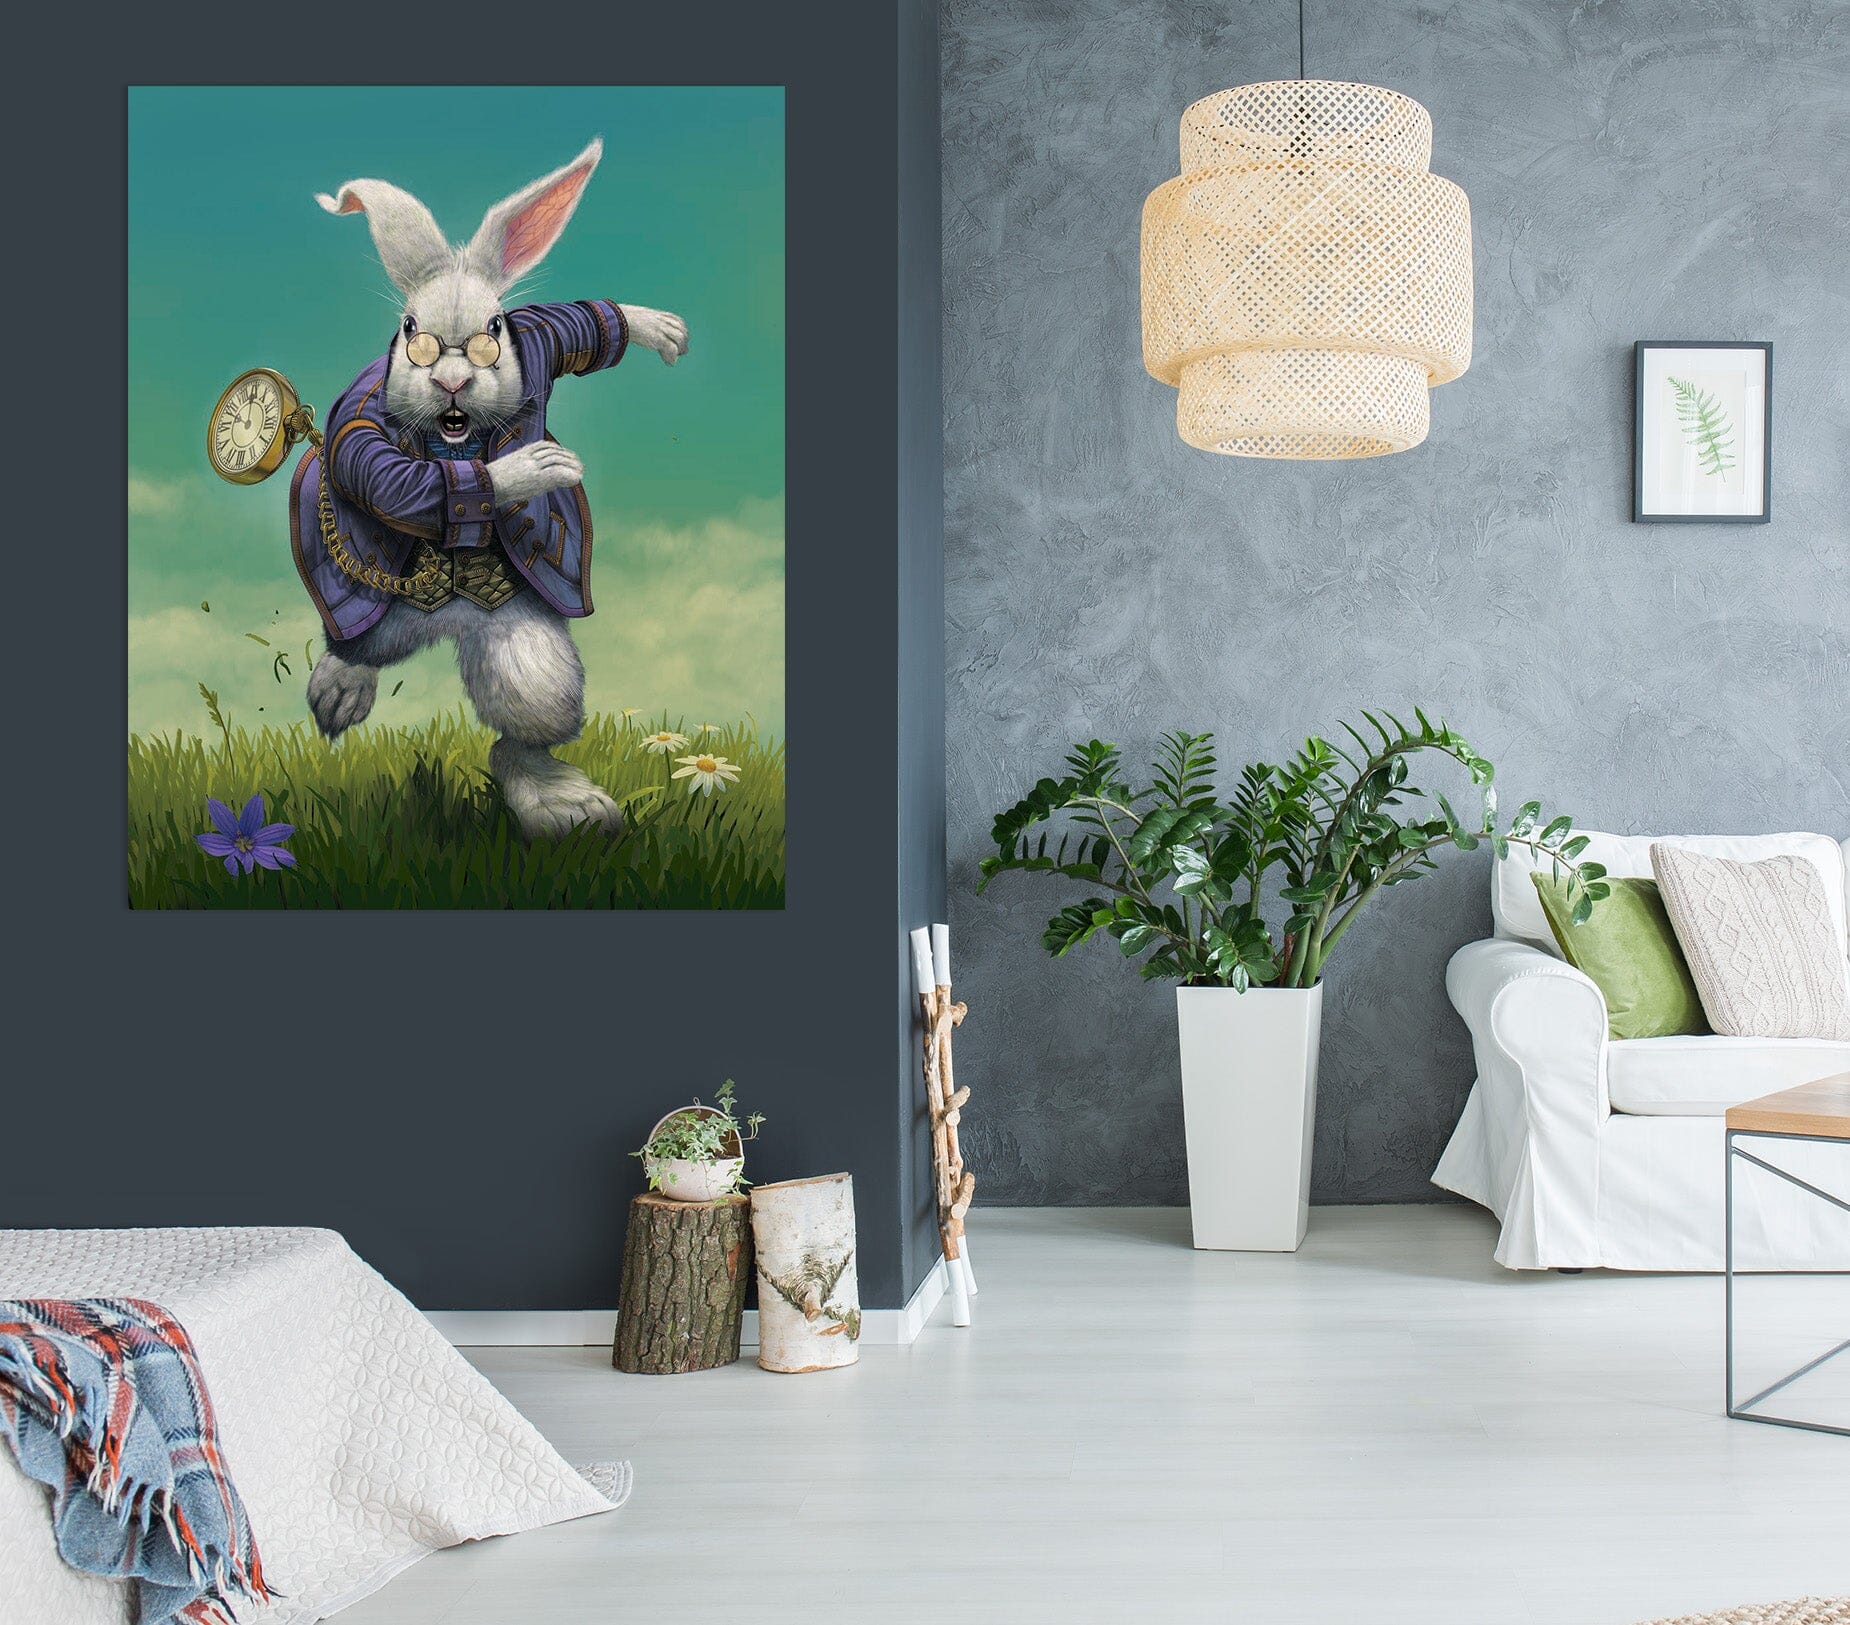 3D White Rabbit 092 Vincent Hie Wall Sticker Wallpaper AJ Wallpaper 2 